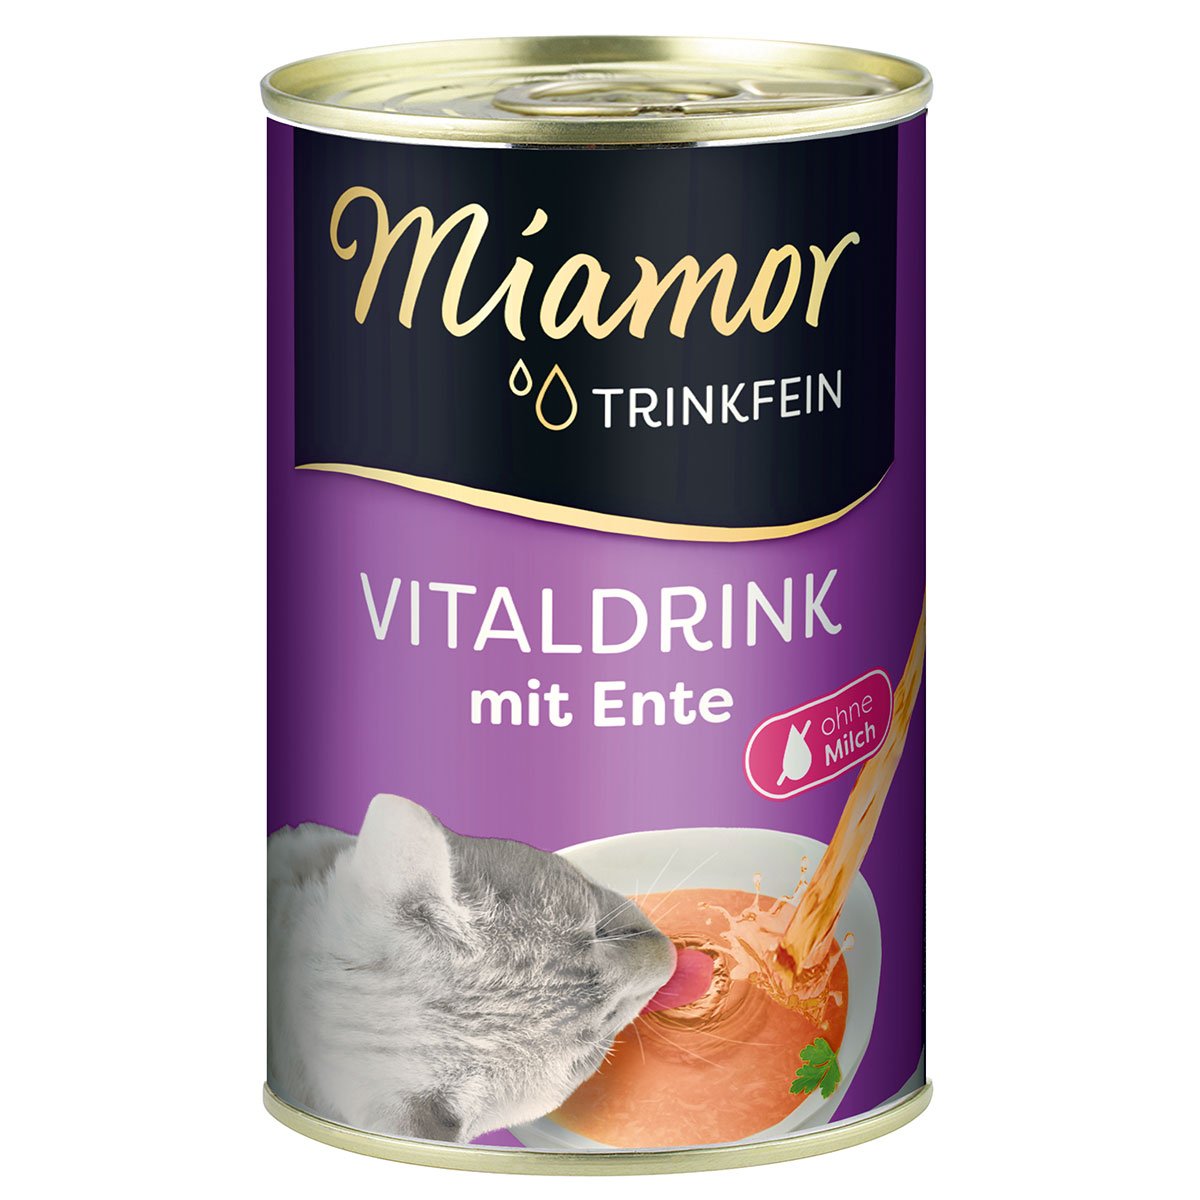 Miamor Trinkfein - Vitaldrink mit Ente 24x135ml von Miamor